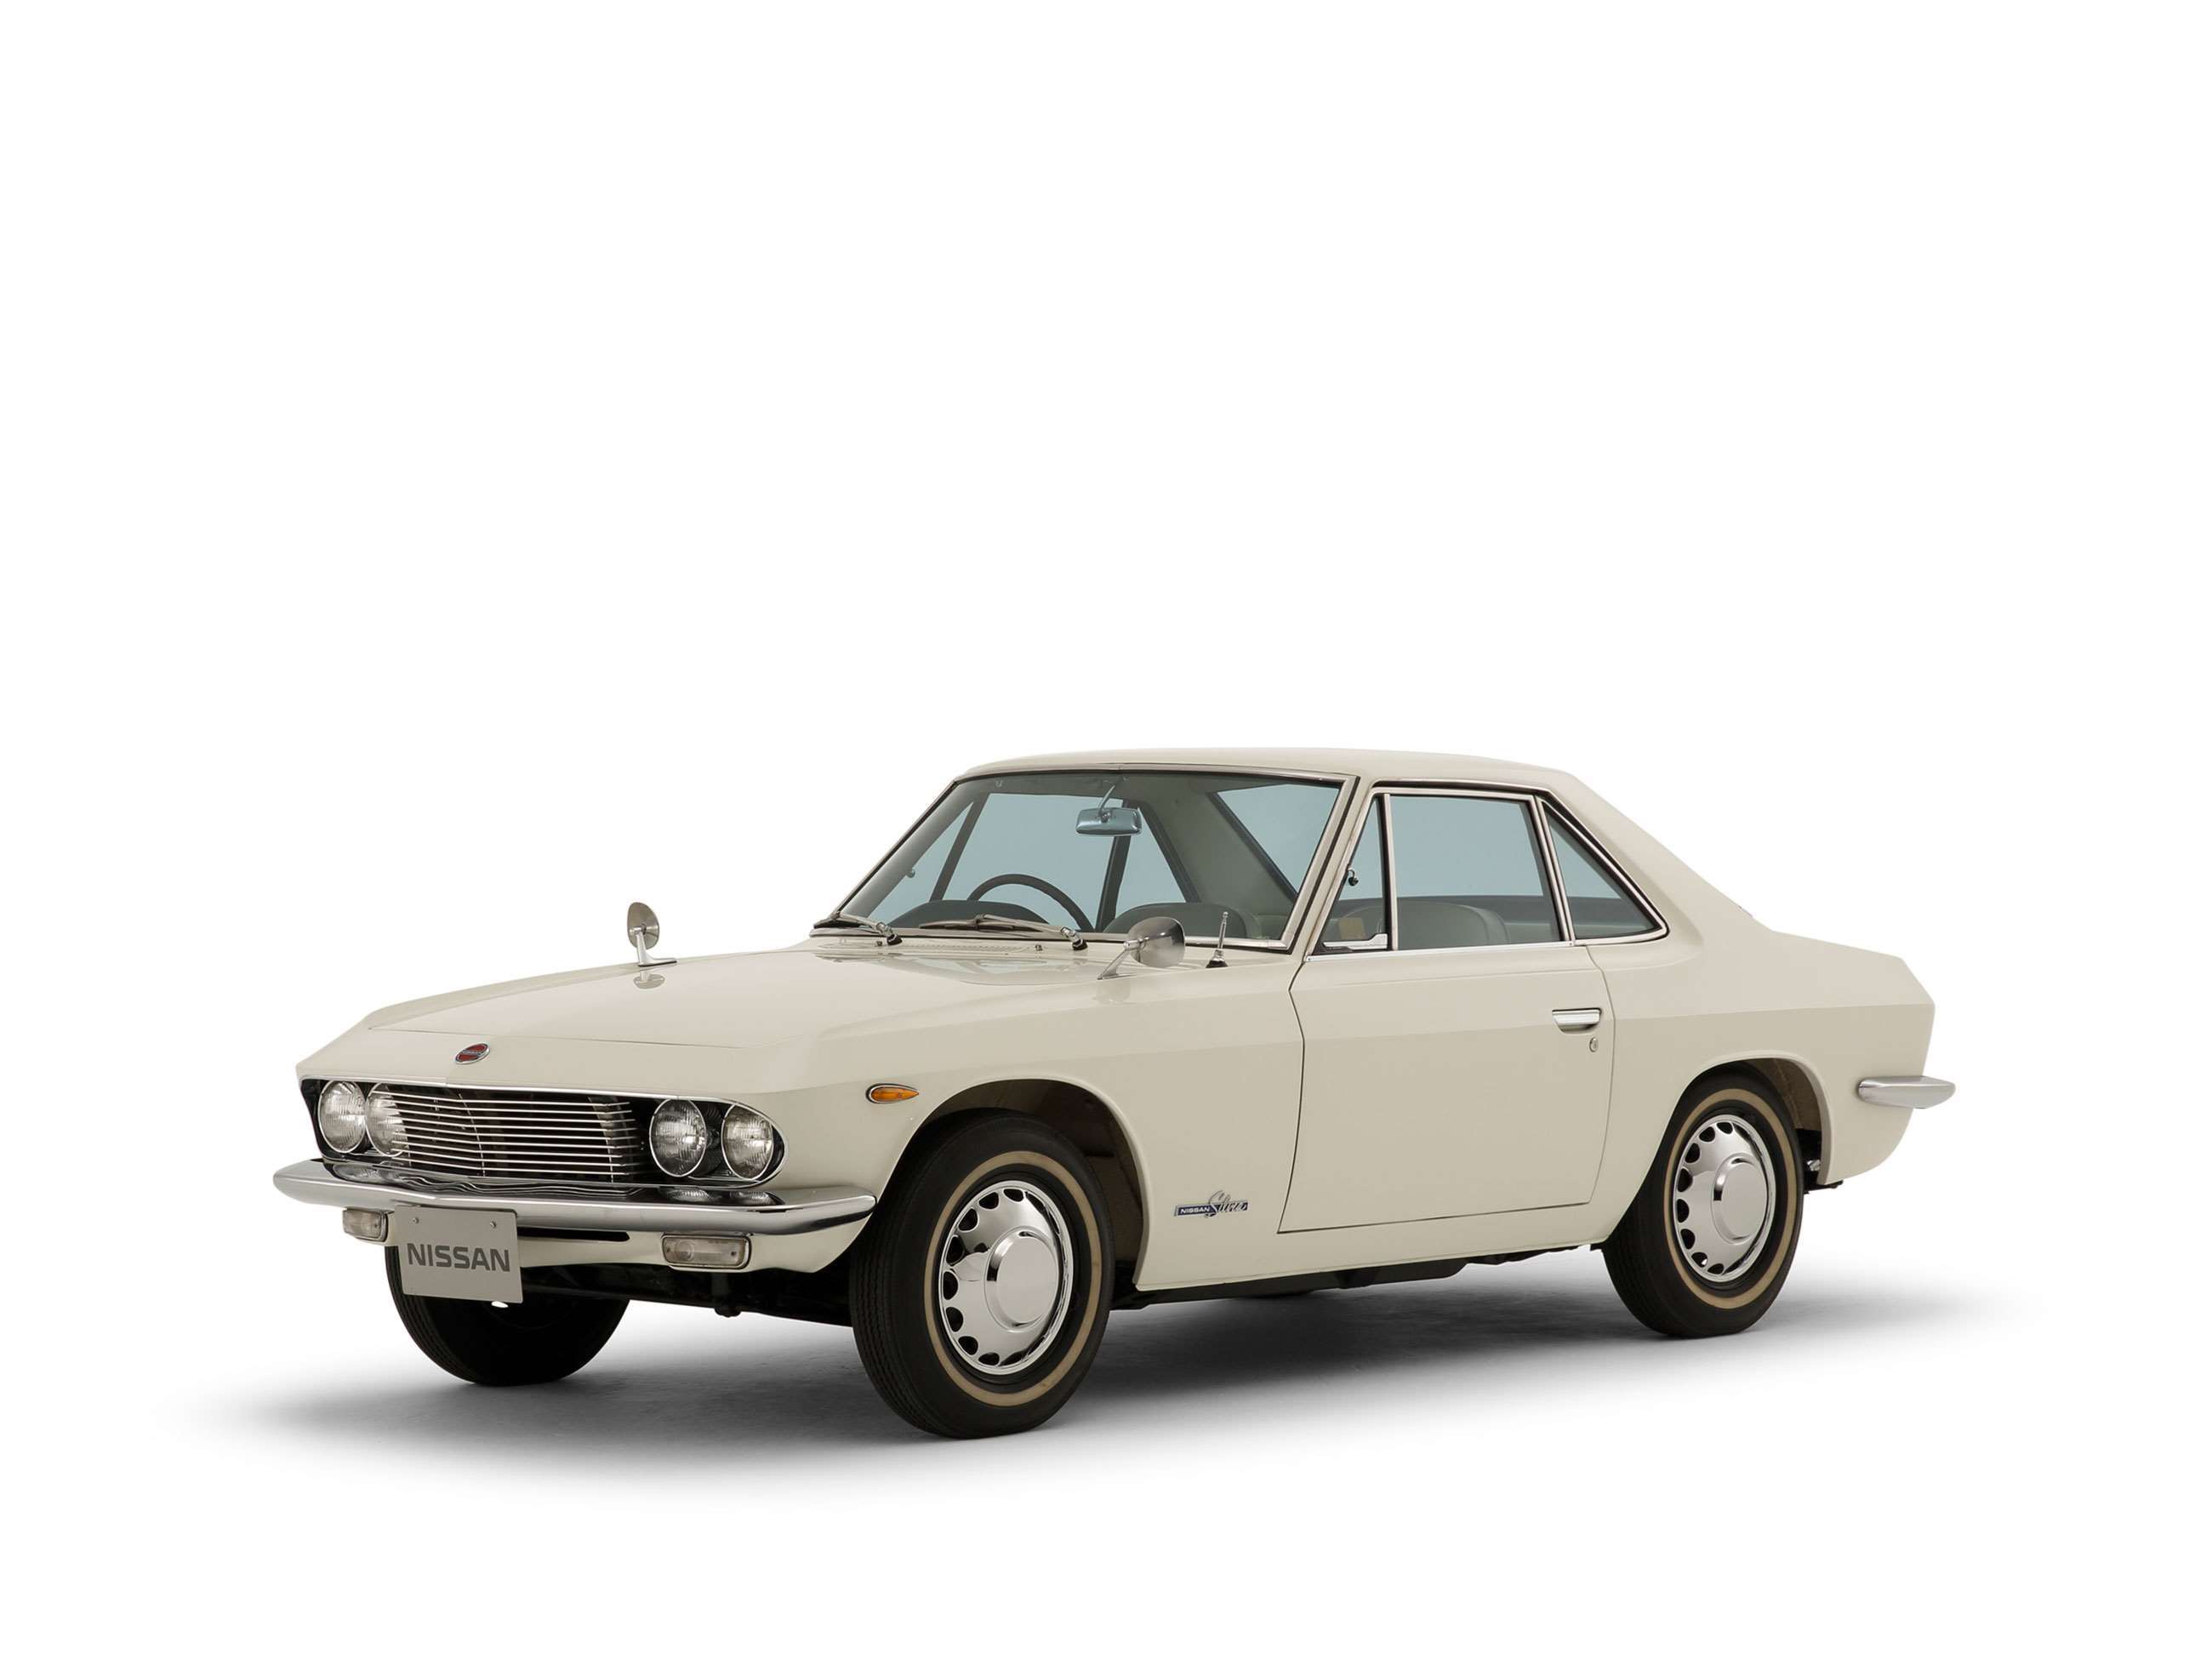 best-datsuns-ever-made-5-datsun-silvia-1600-coupe-goodwood-04062020.jpg